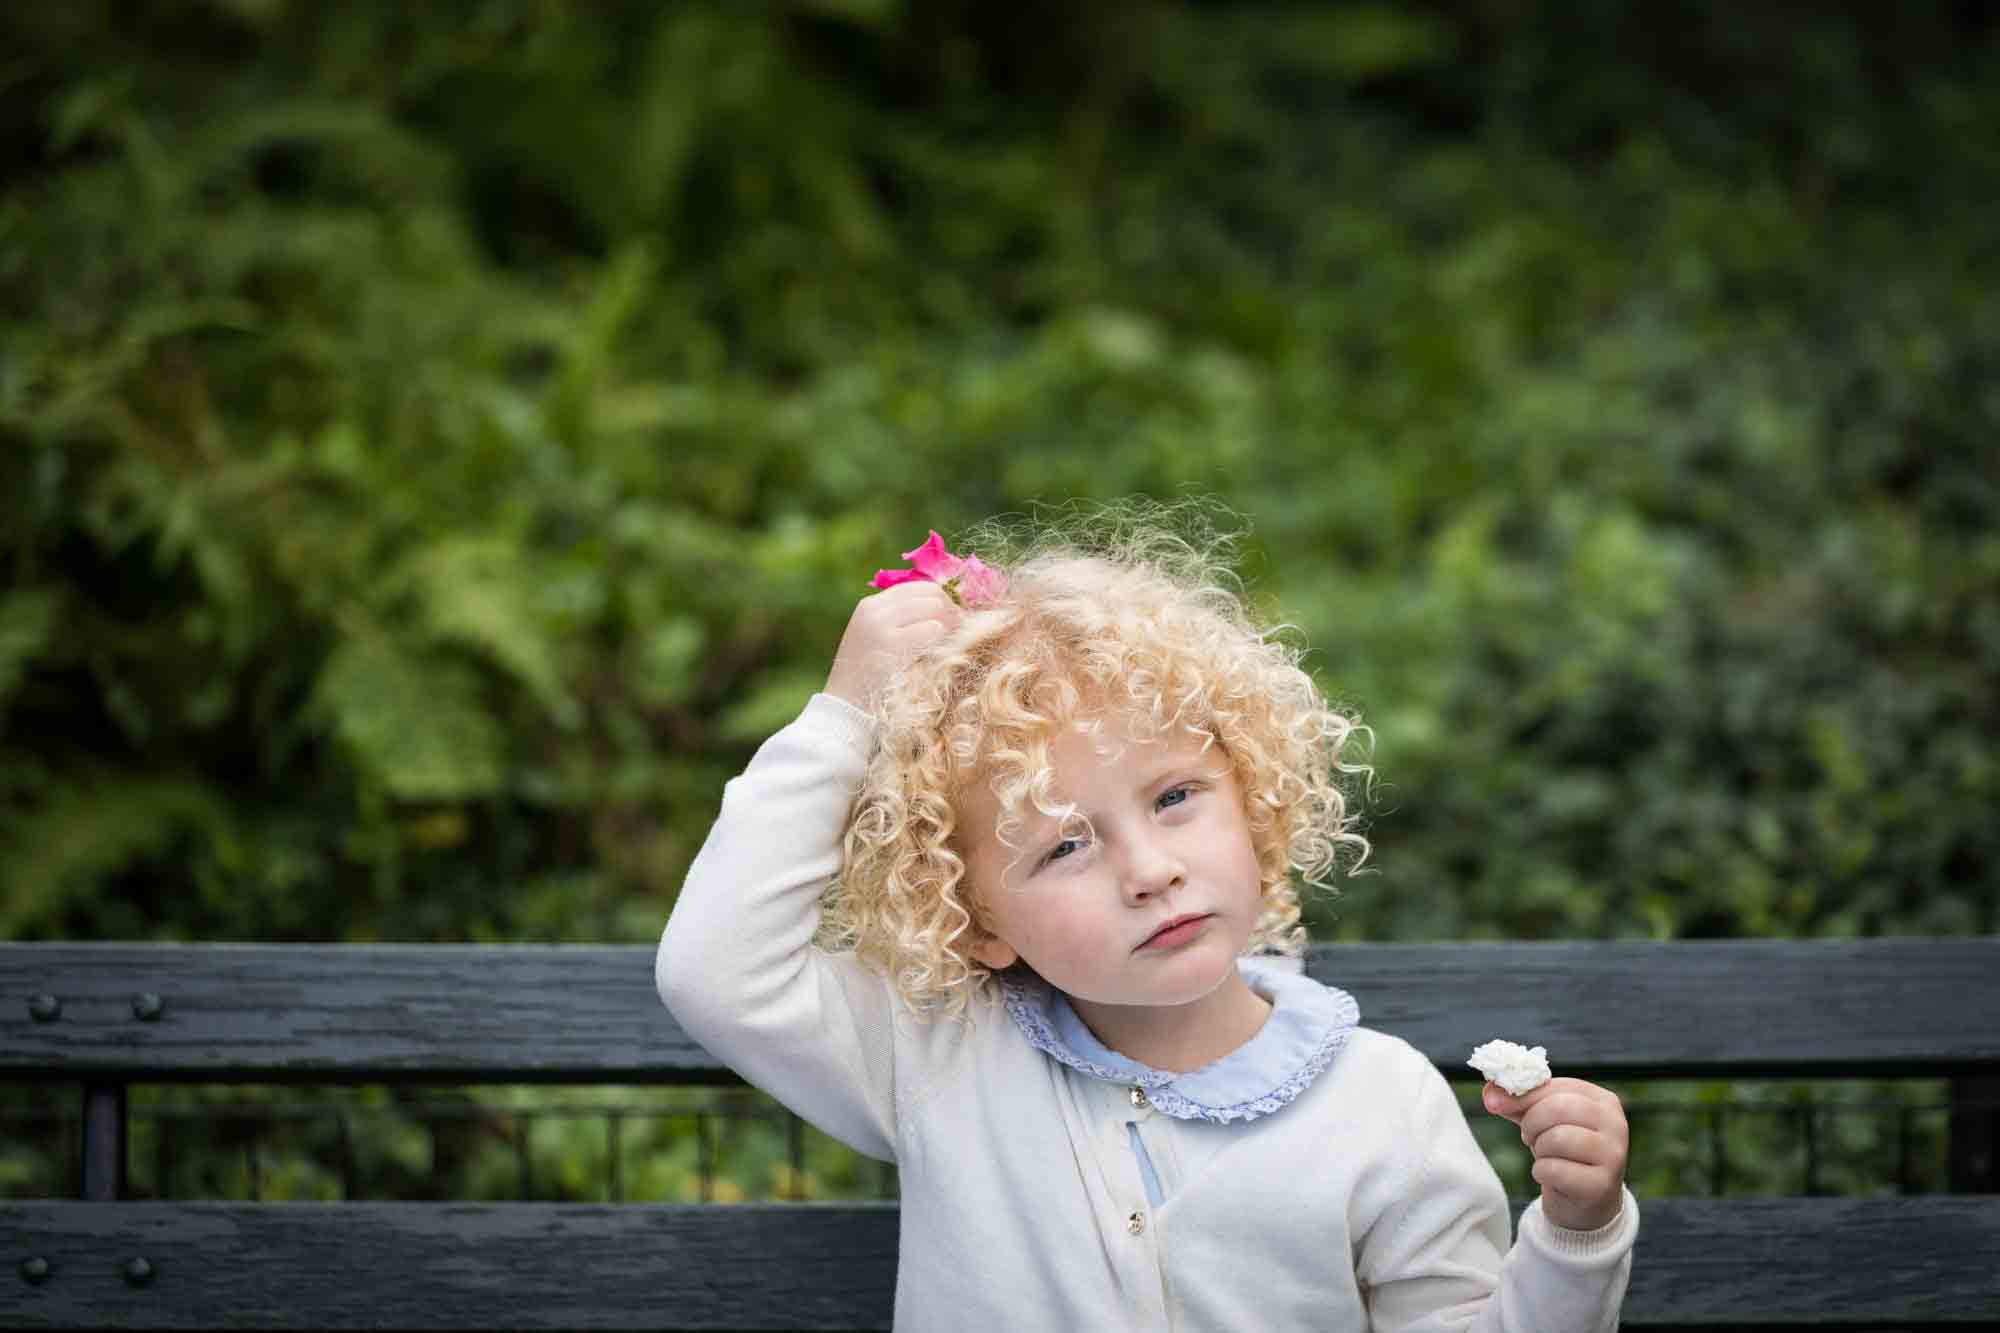 Central Park family portrait of little blonde girl holding pink flower on head